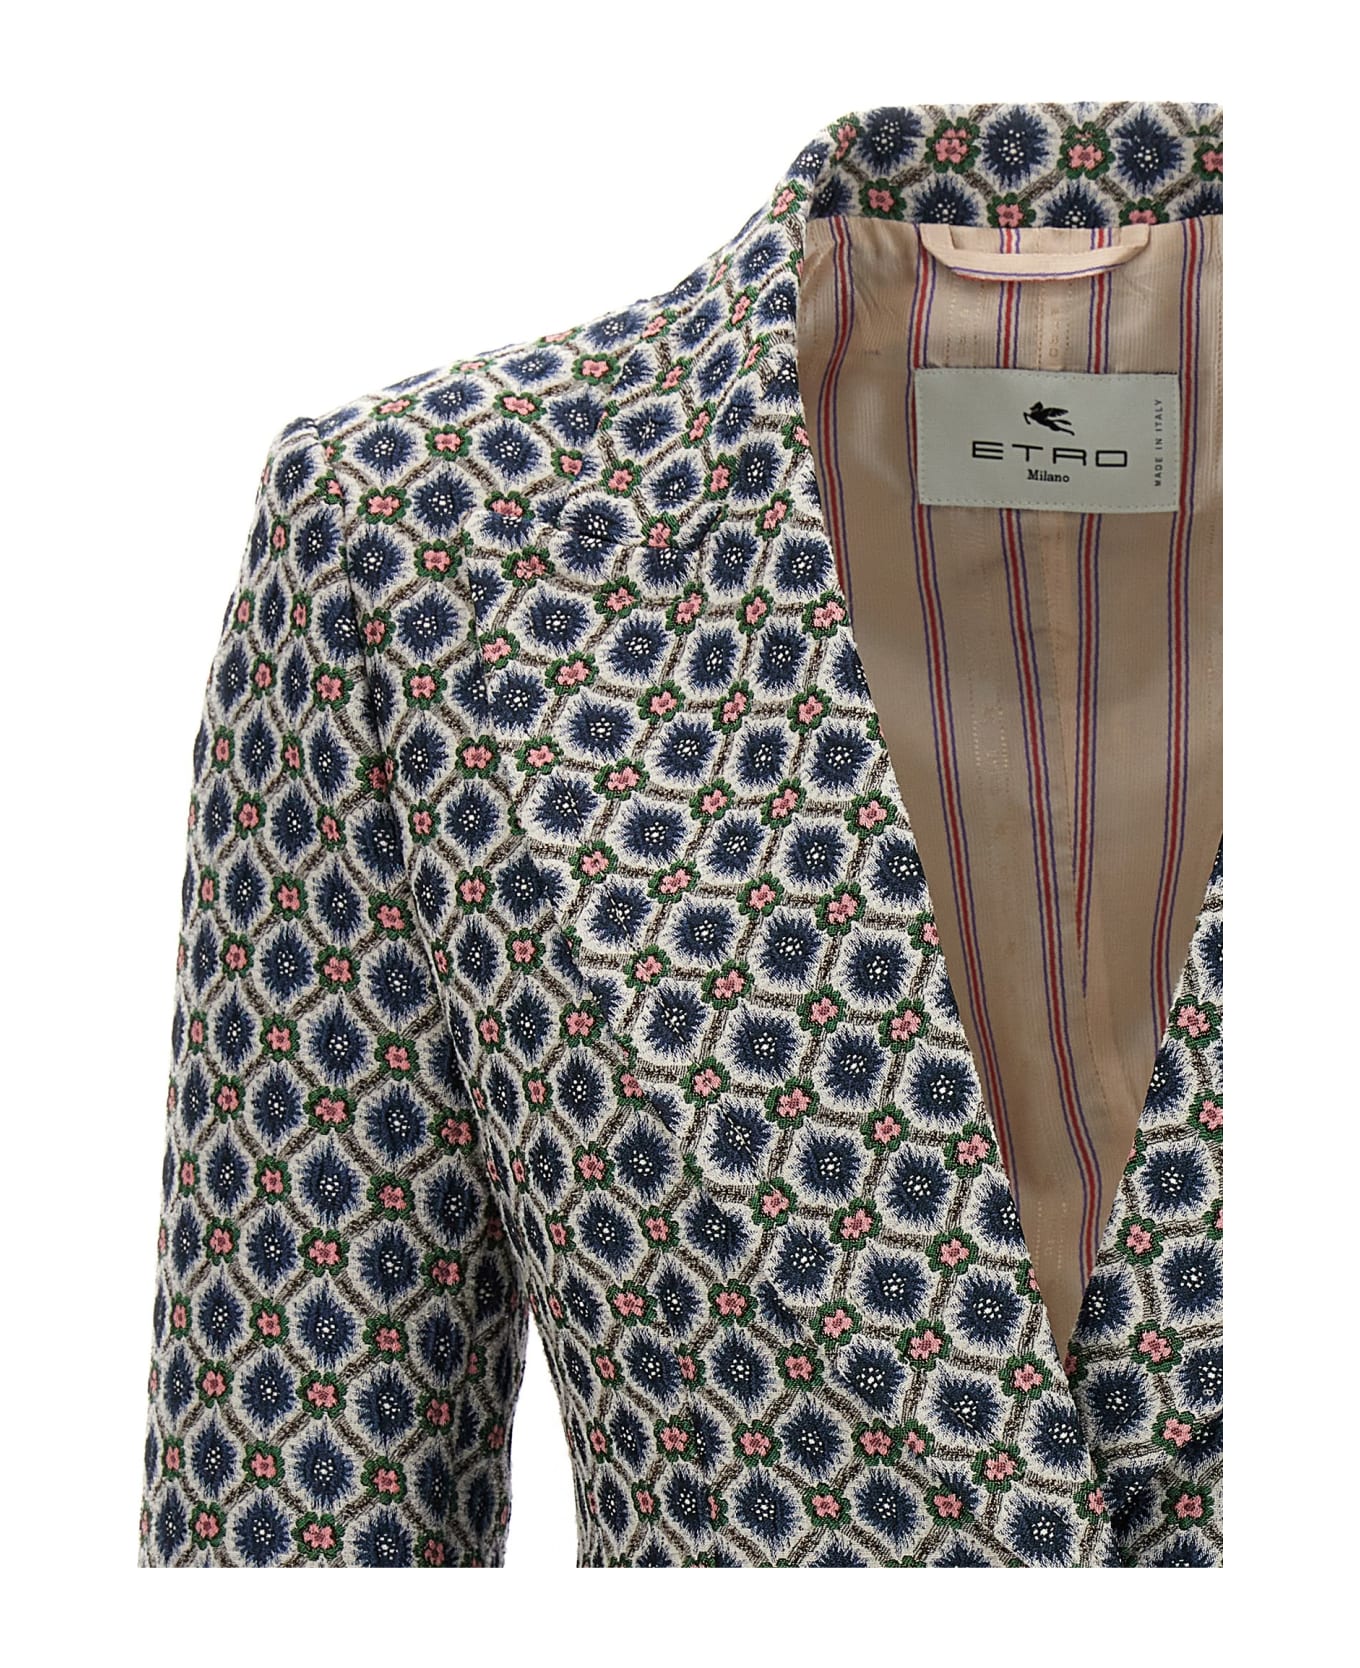 Etro Floral Jacquard Blazer Jacket - Multicolour ブレザー